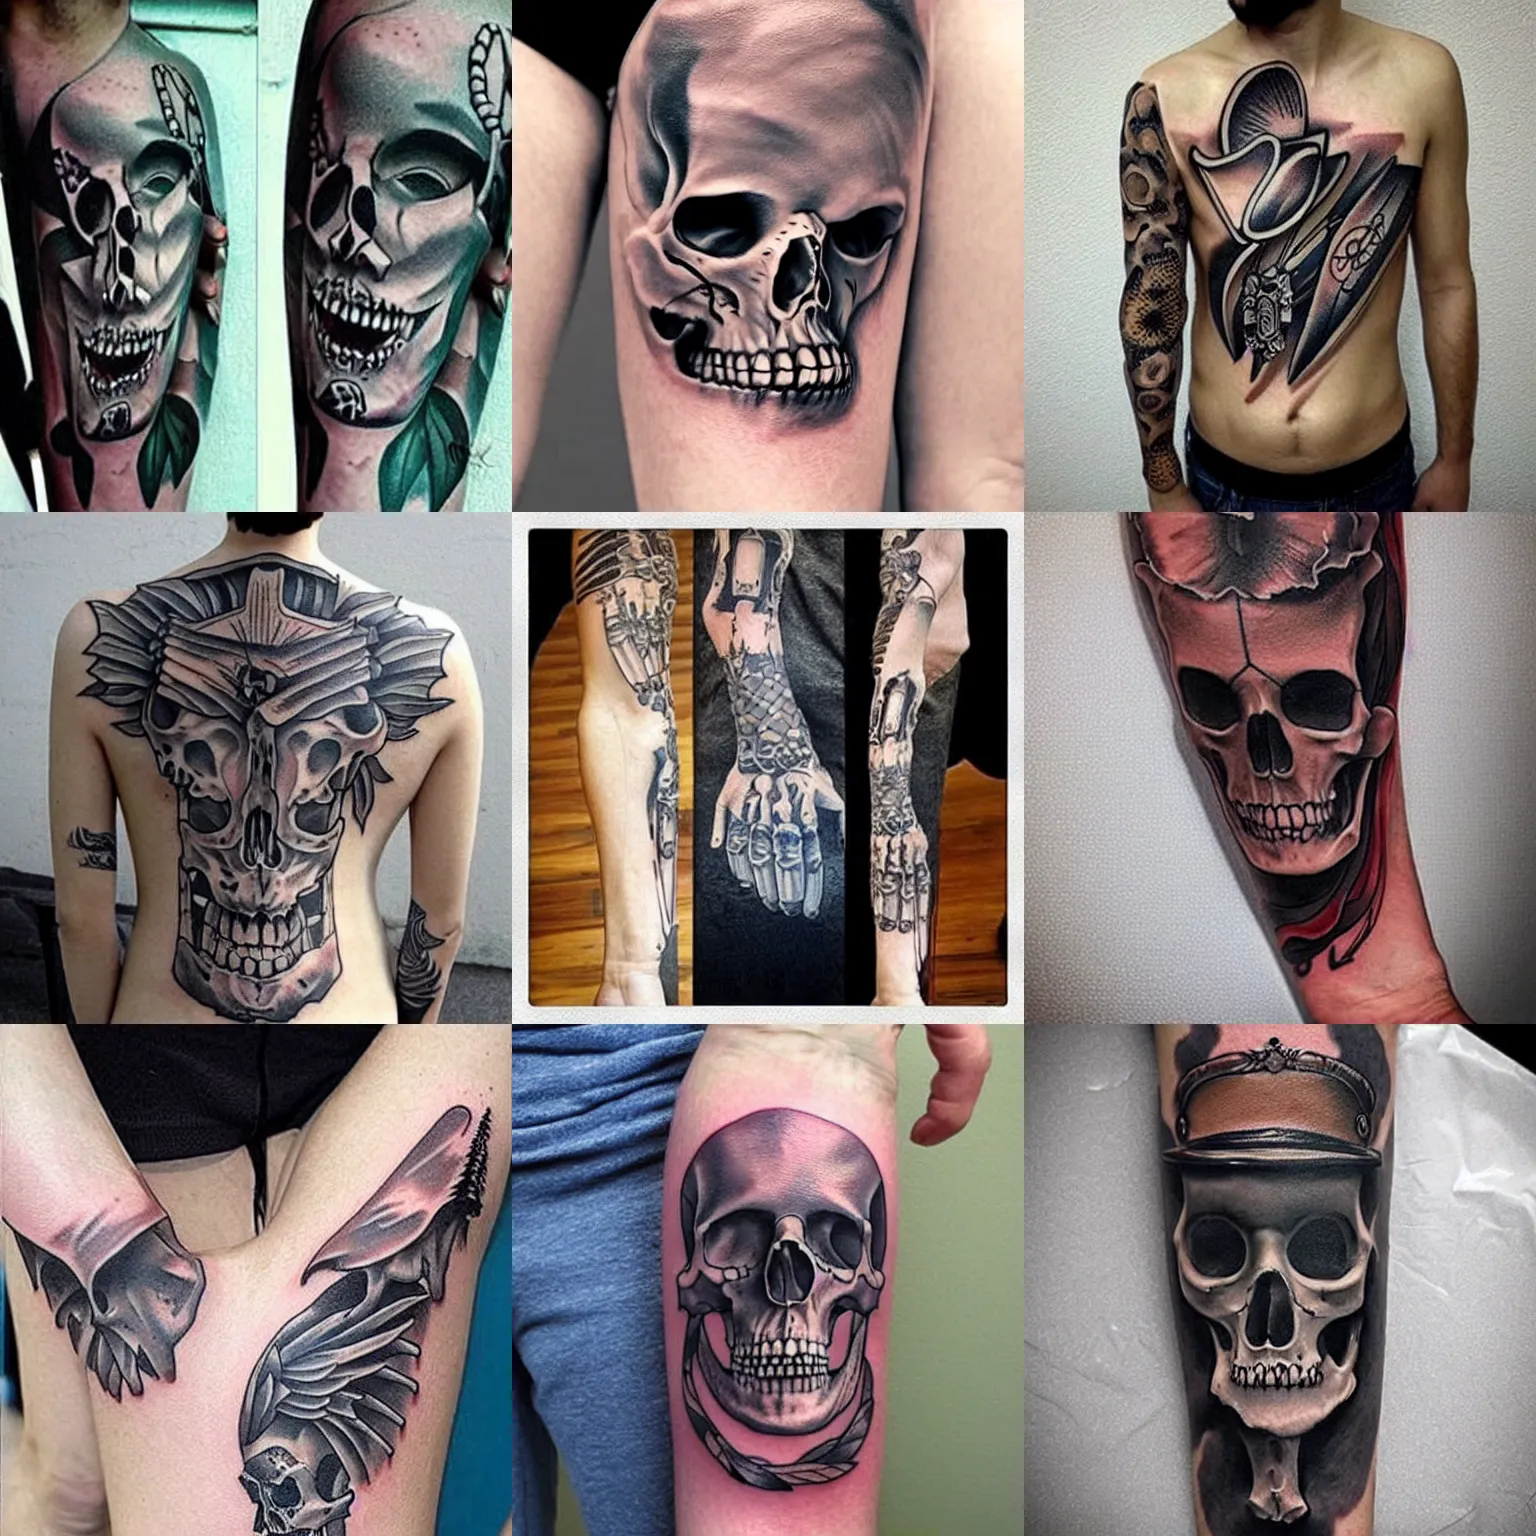 Prompt: stylish tattoo of bones, very very creative